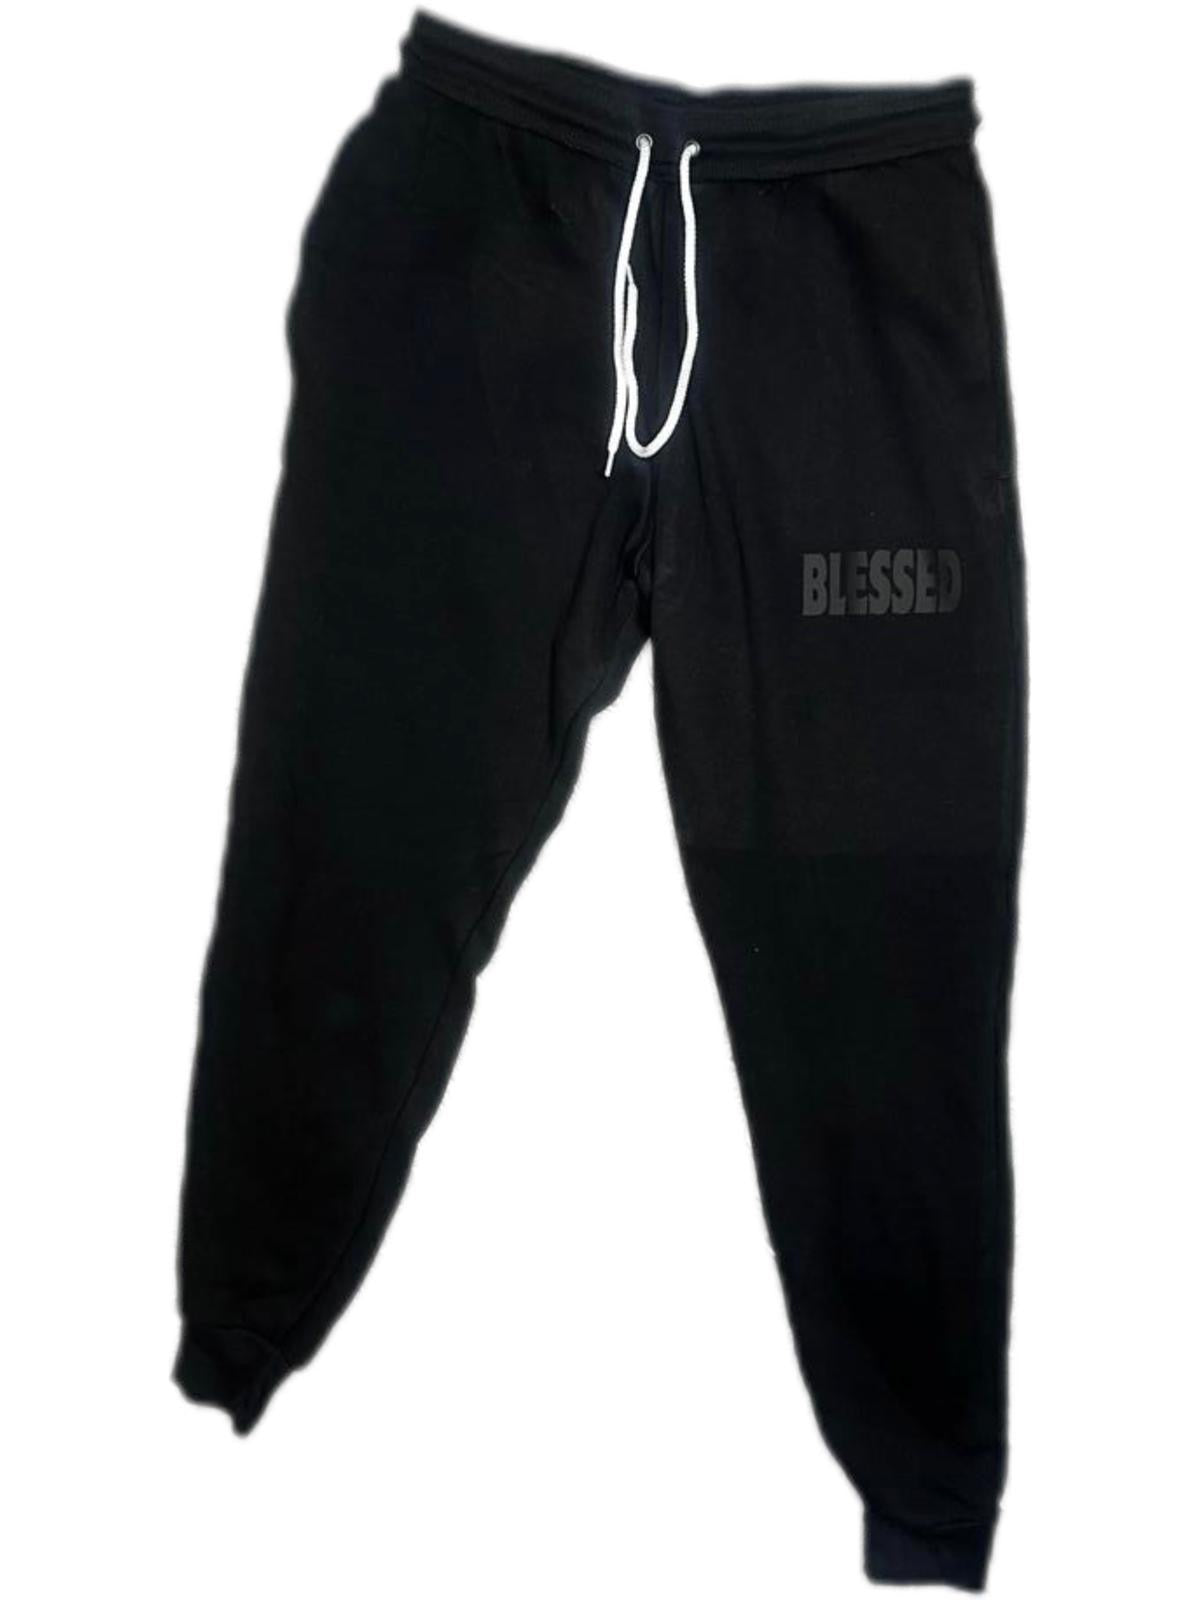 BLESSED Unisex Jogger Set - Black on Black